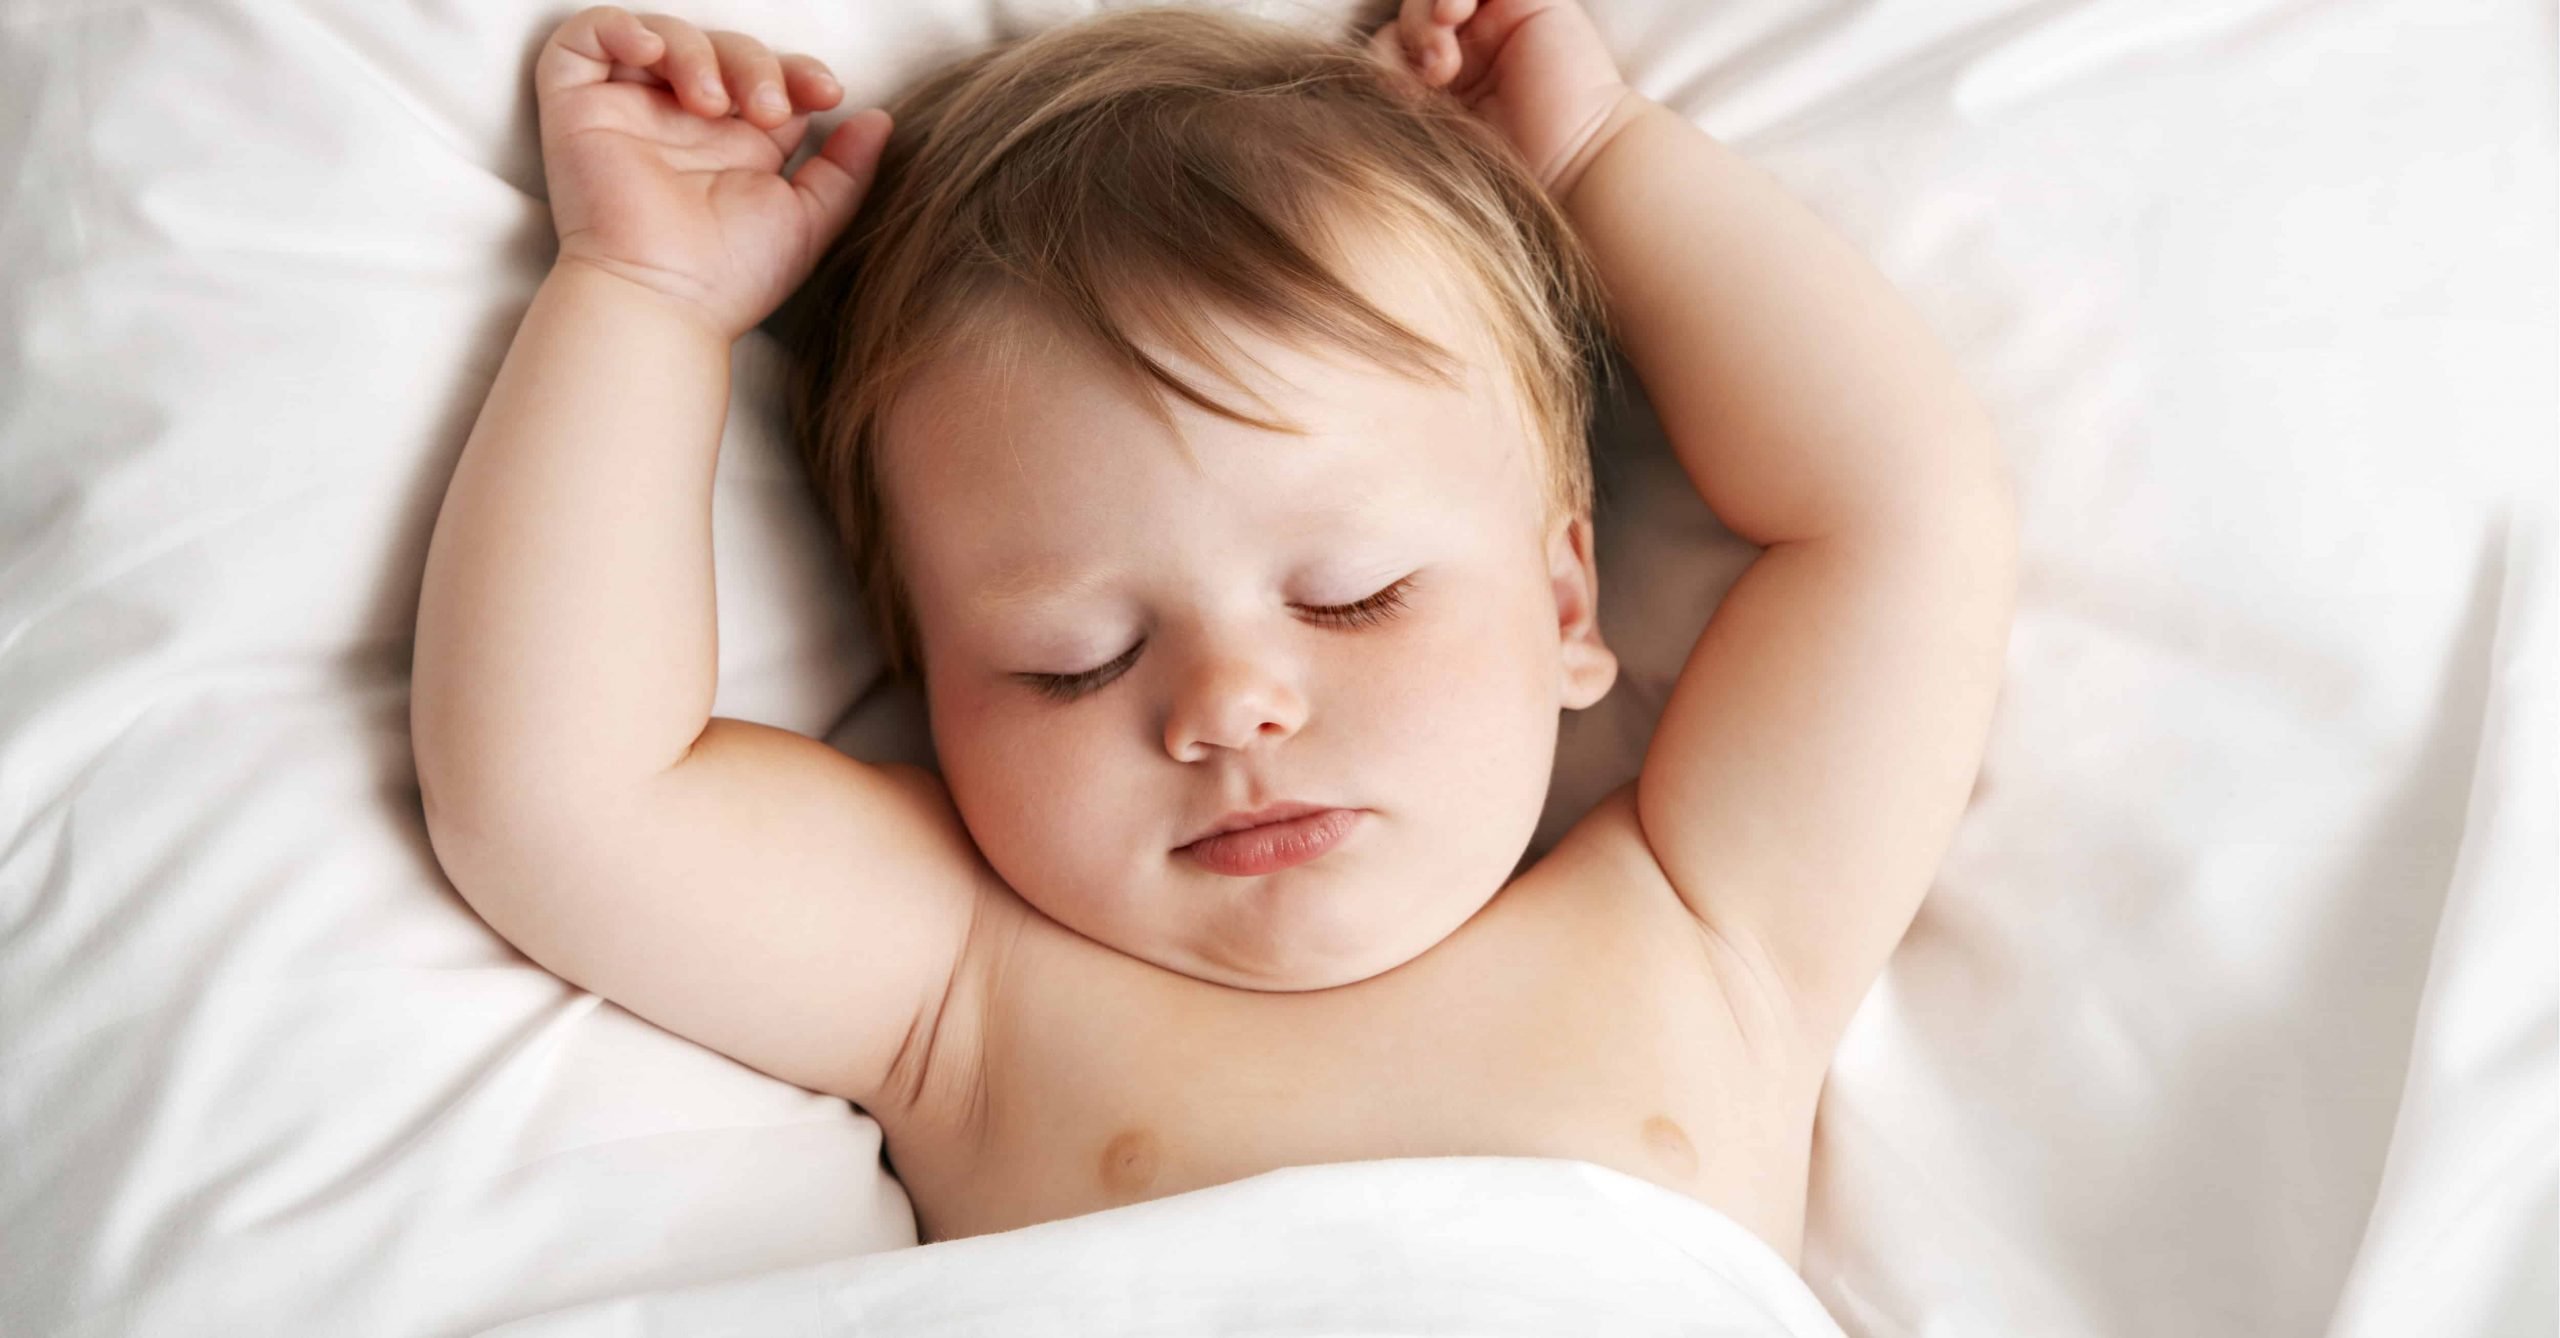 5 Sleep Options For Your Baby